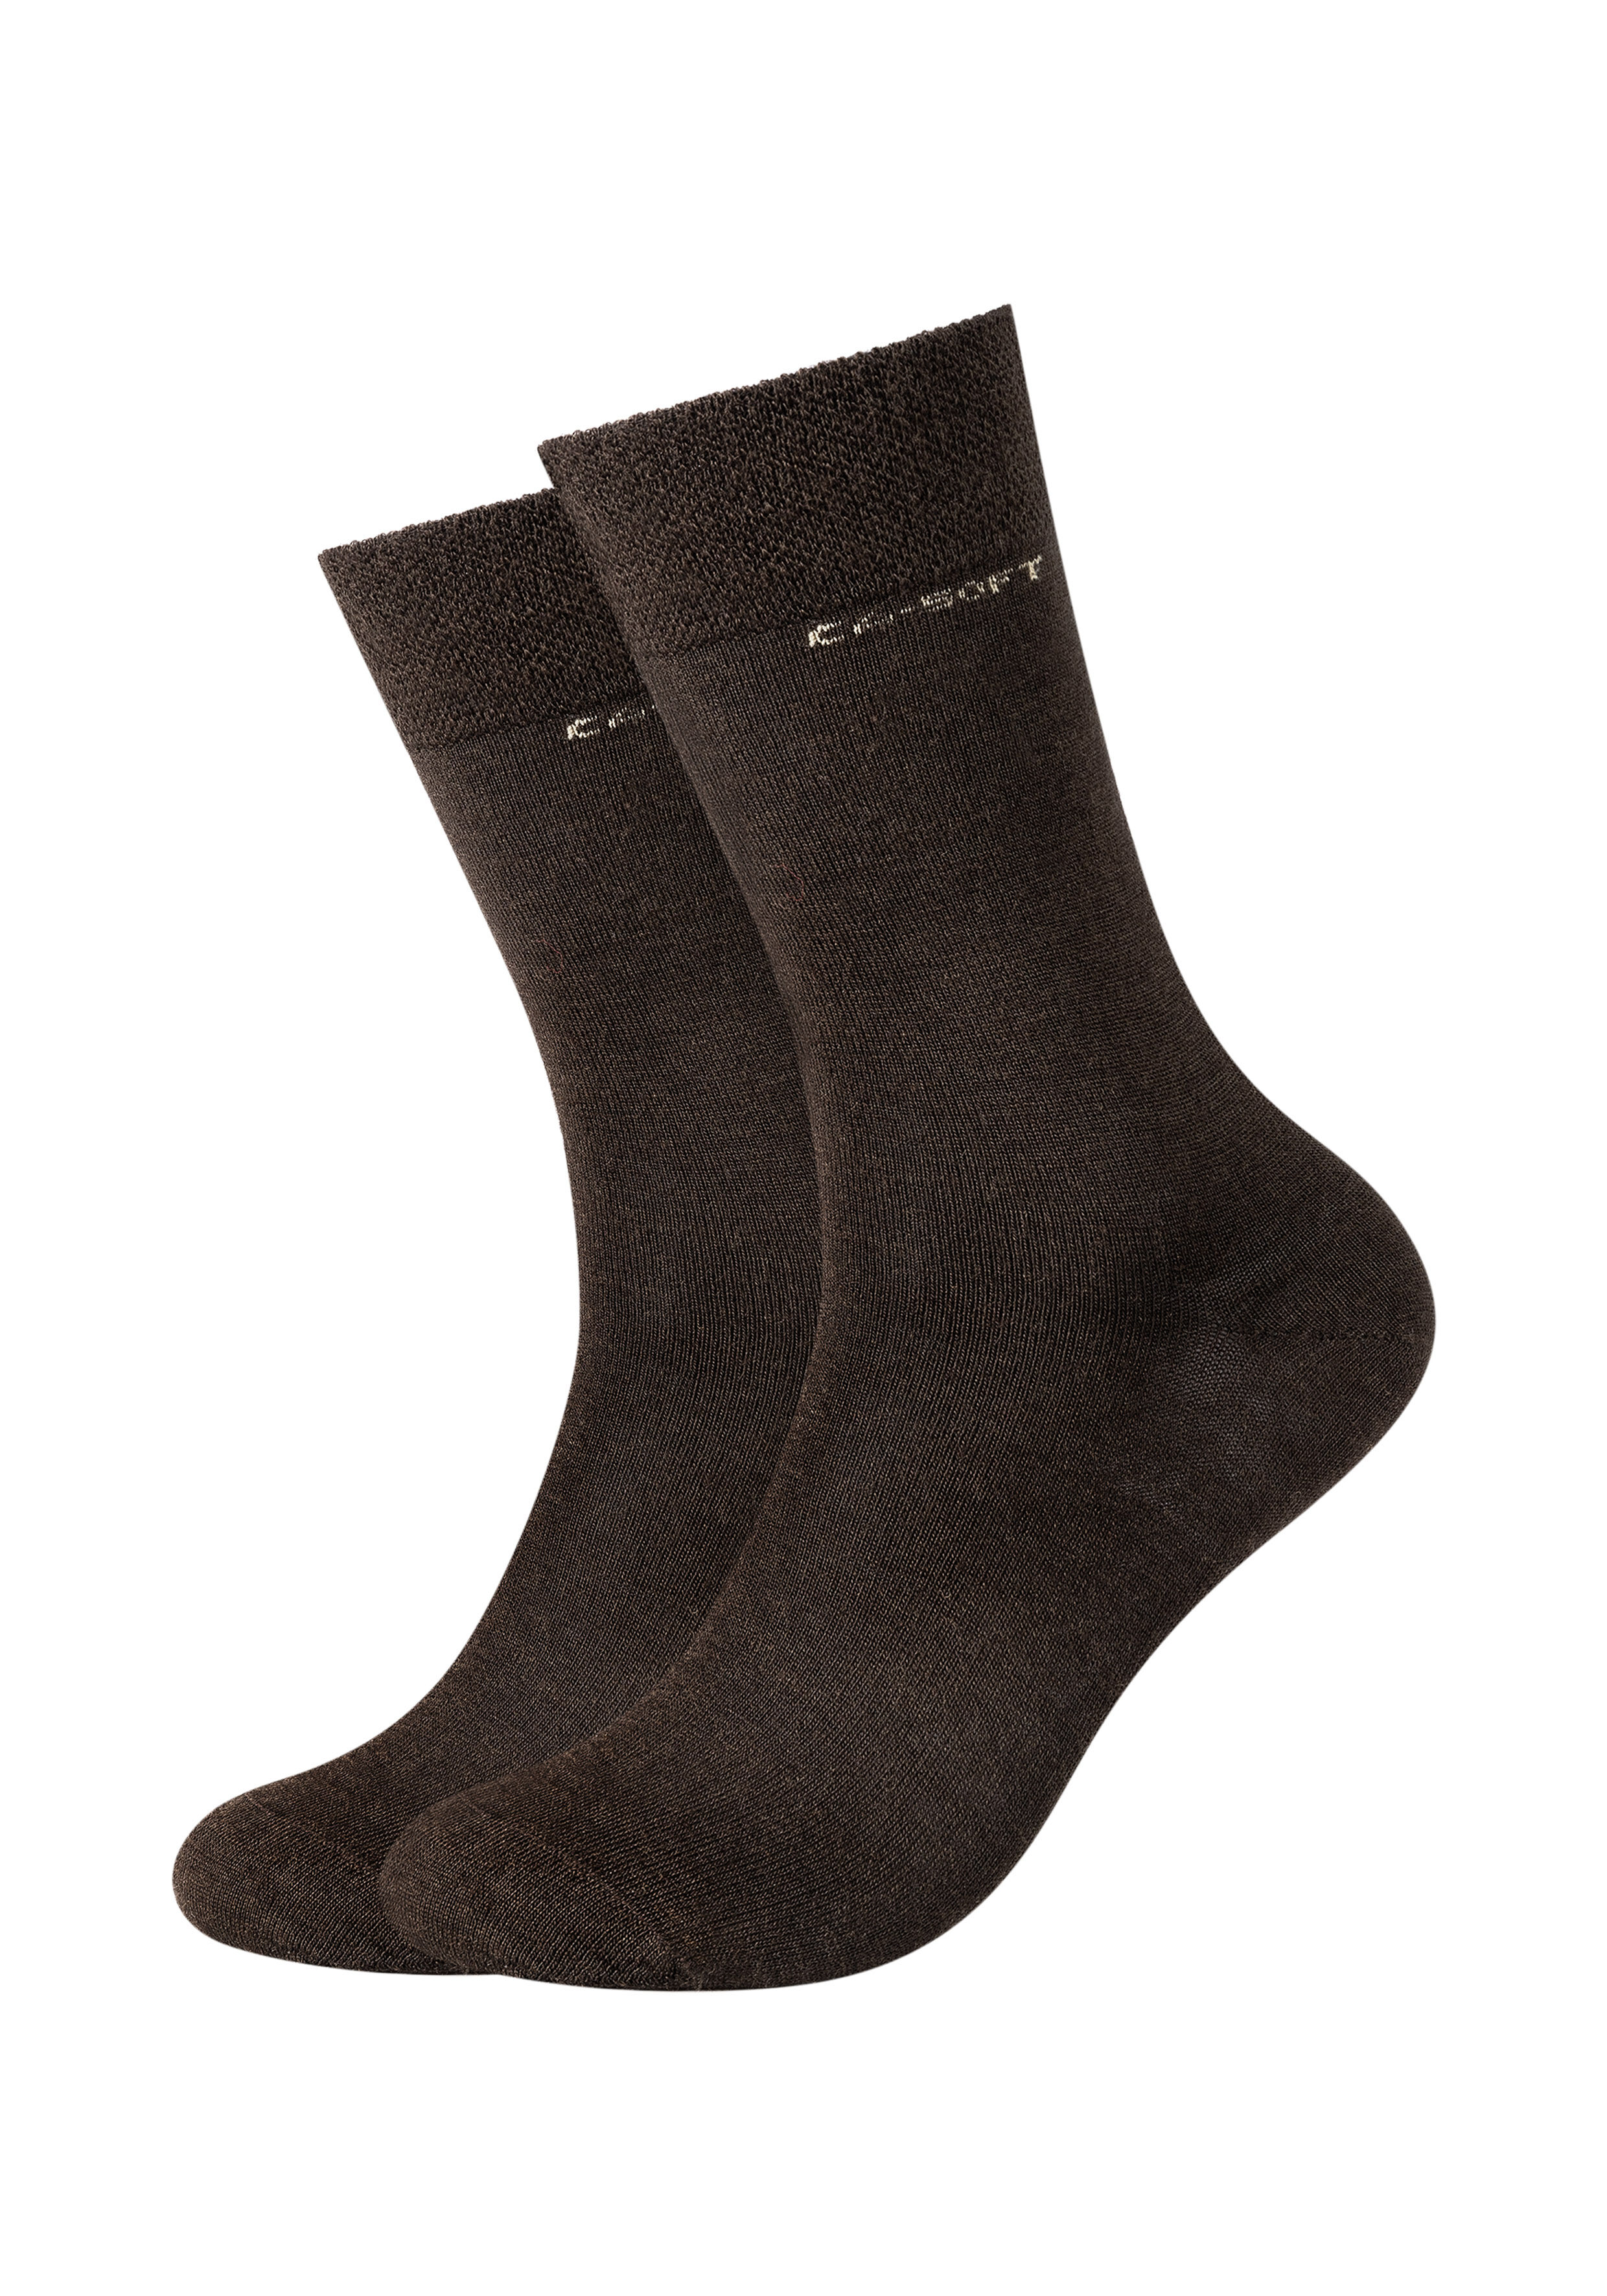 Unisex-Woll-Socke " ca-soft tex wool Socks 2p" Doppel-Pack